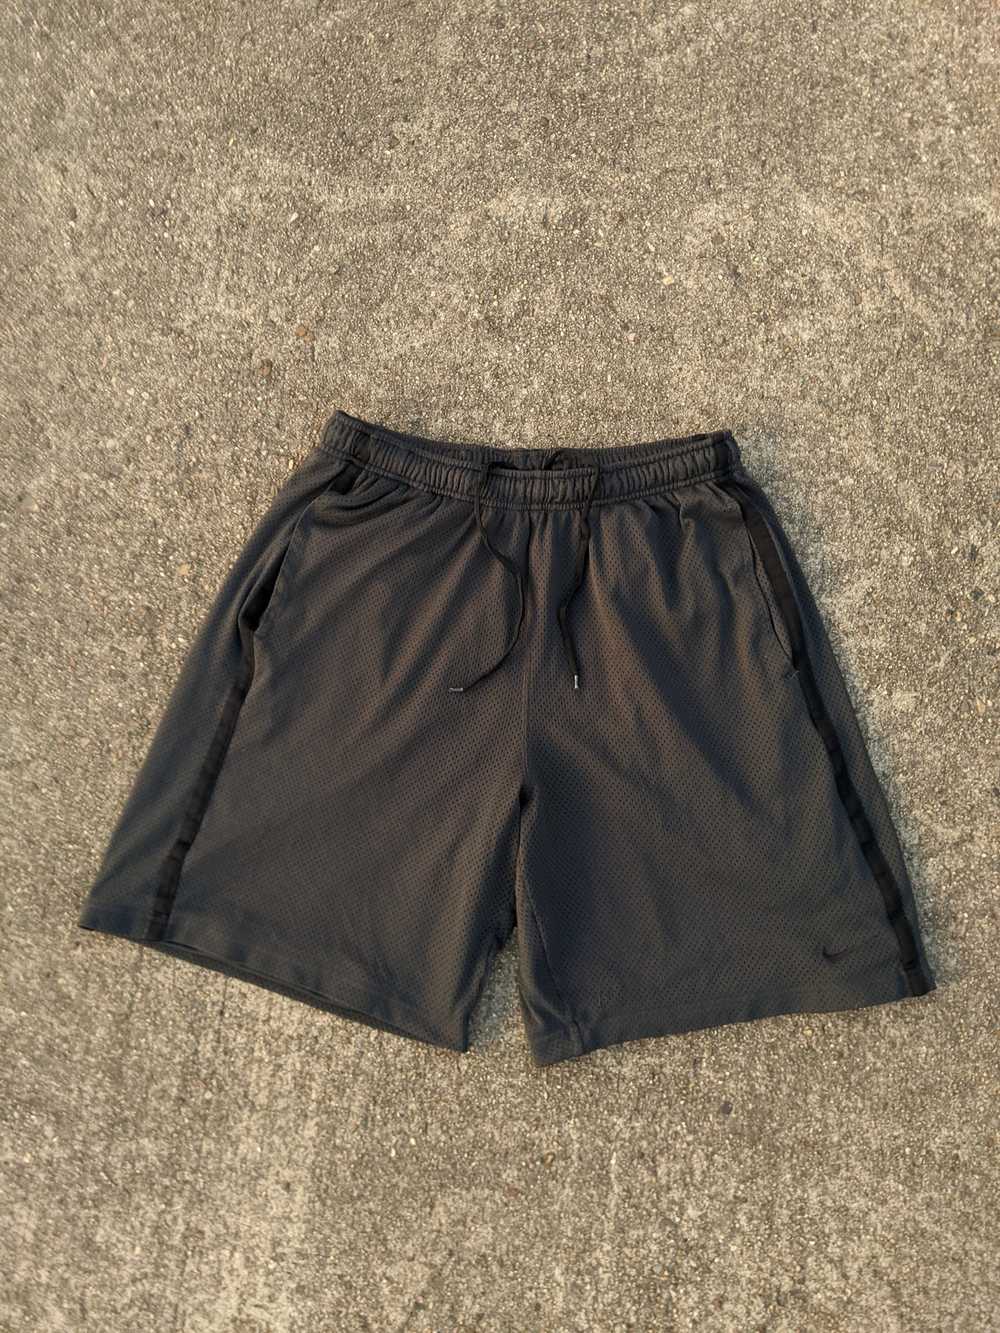 Nike Nike grey mesh sport shorts size XL shipping… - image 1